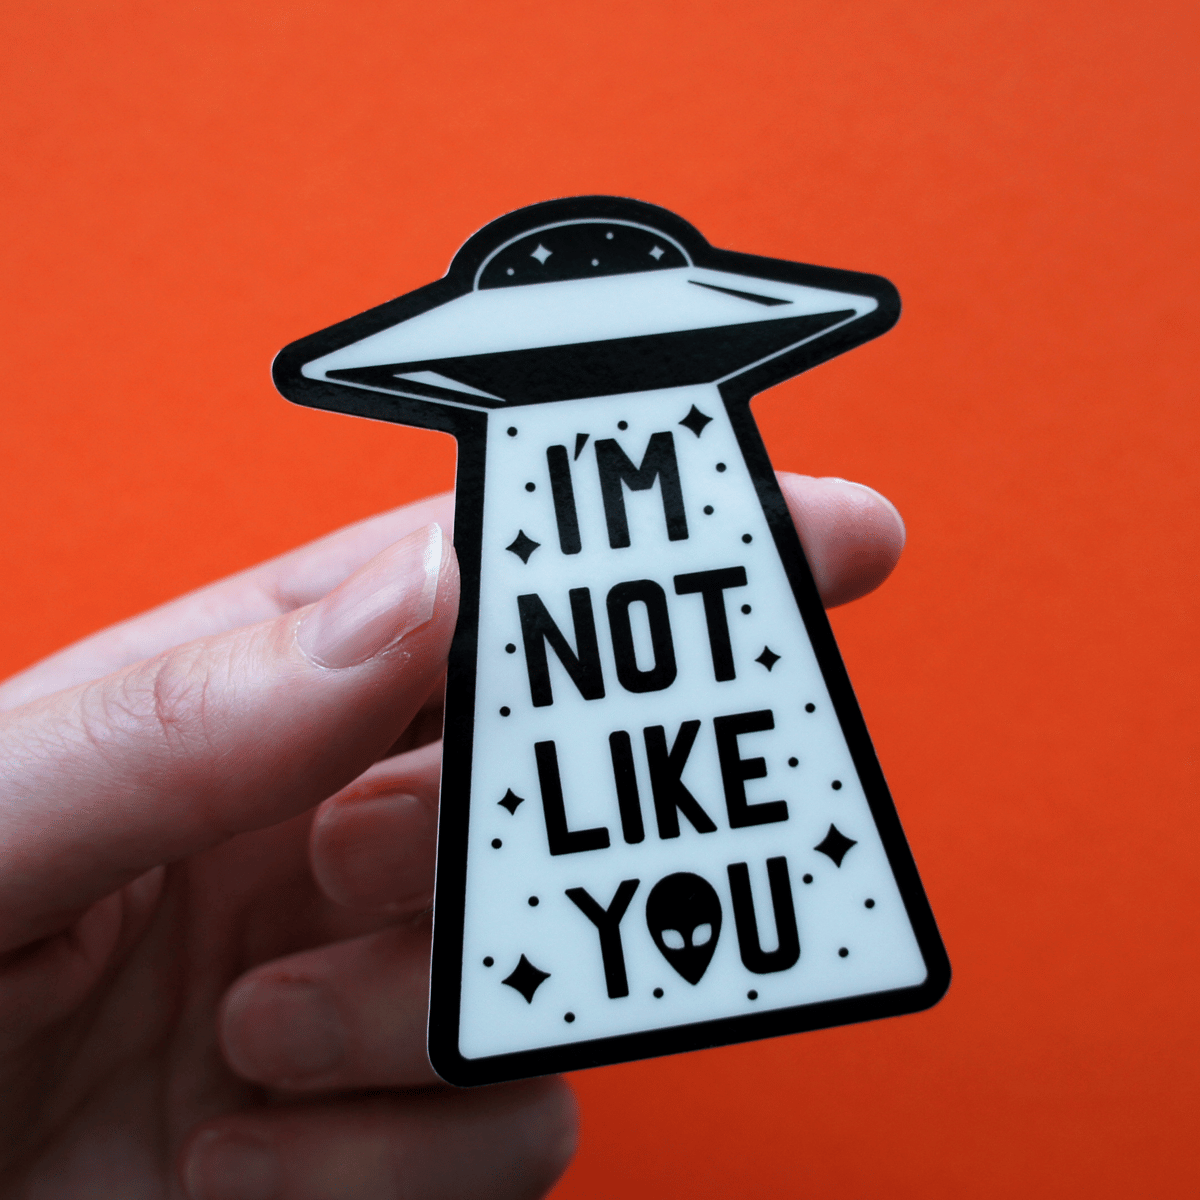 Glowing UFO Sticker